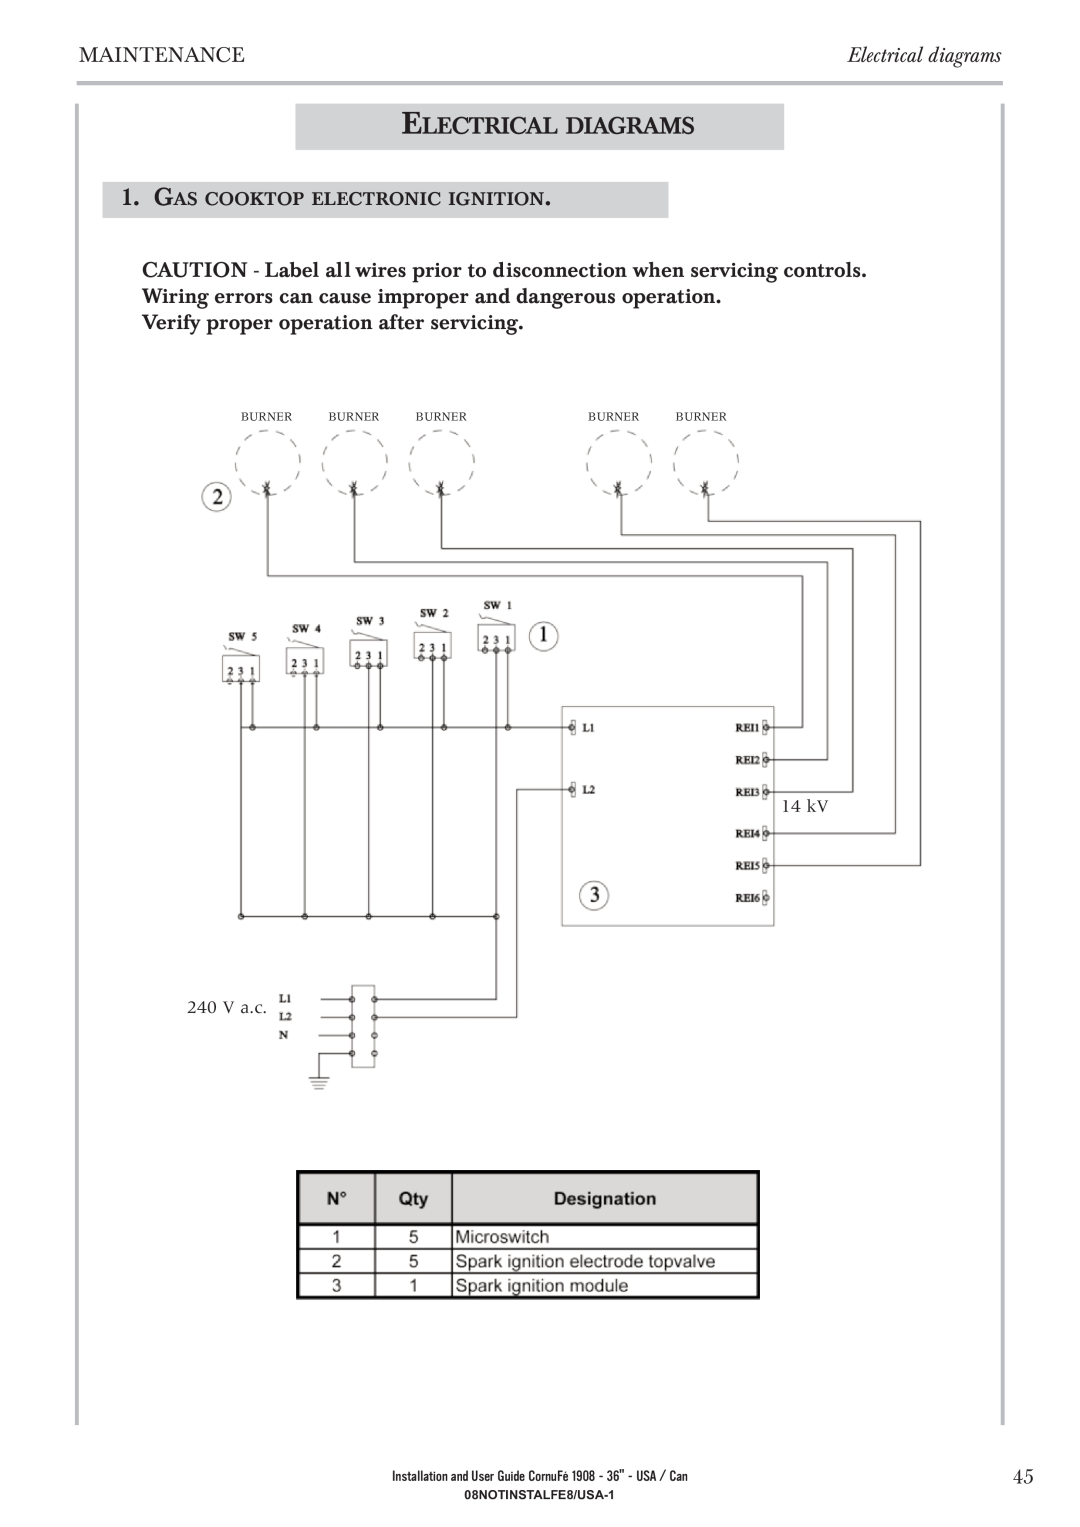 GE 1908 - 36 manual Electrical Diagrams, Electrical diagrams, Gas Cooktop Electronic Ignition, Burner, 08NOTINSTALFE8/USA-1 